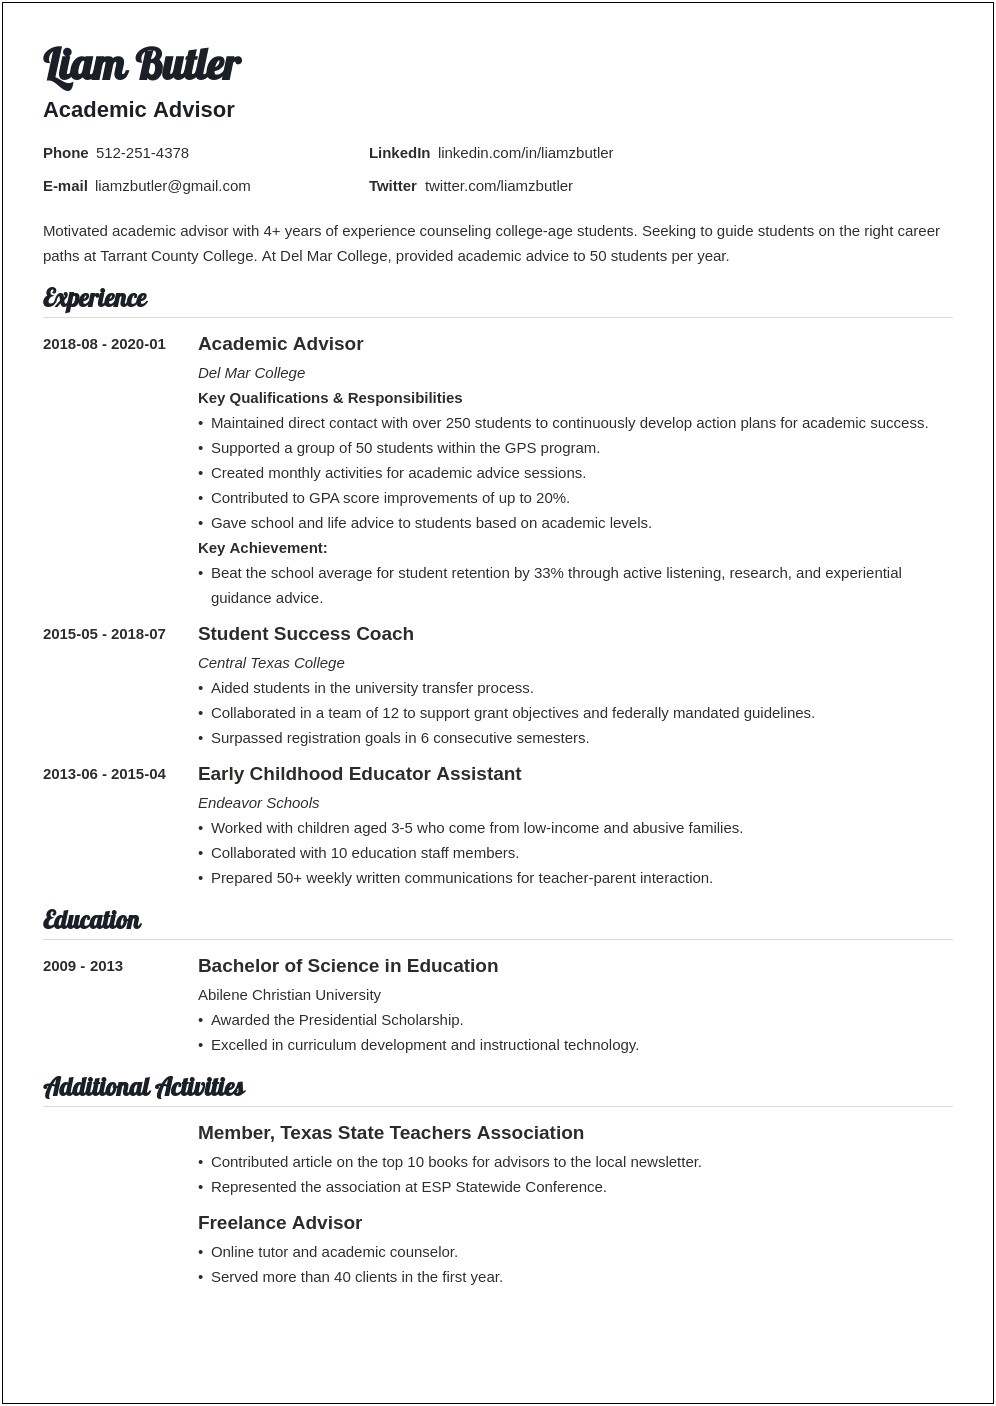 Resume Sample Of A College Advisor